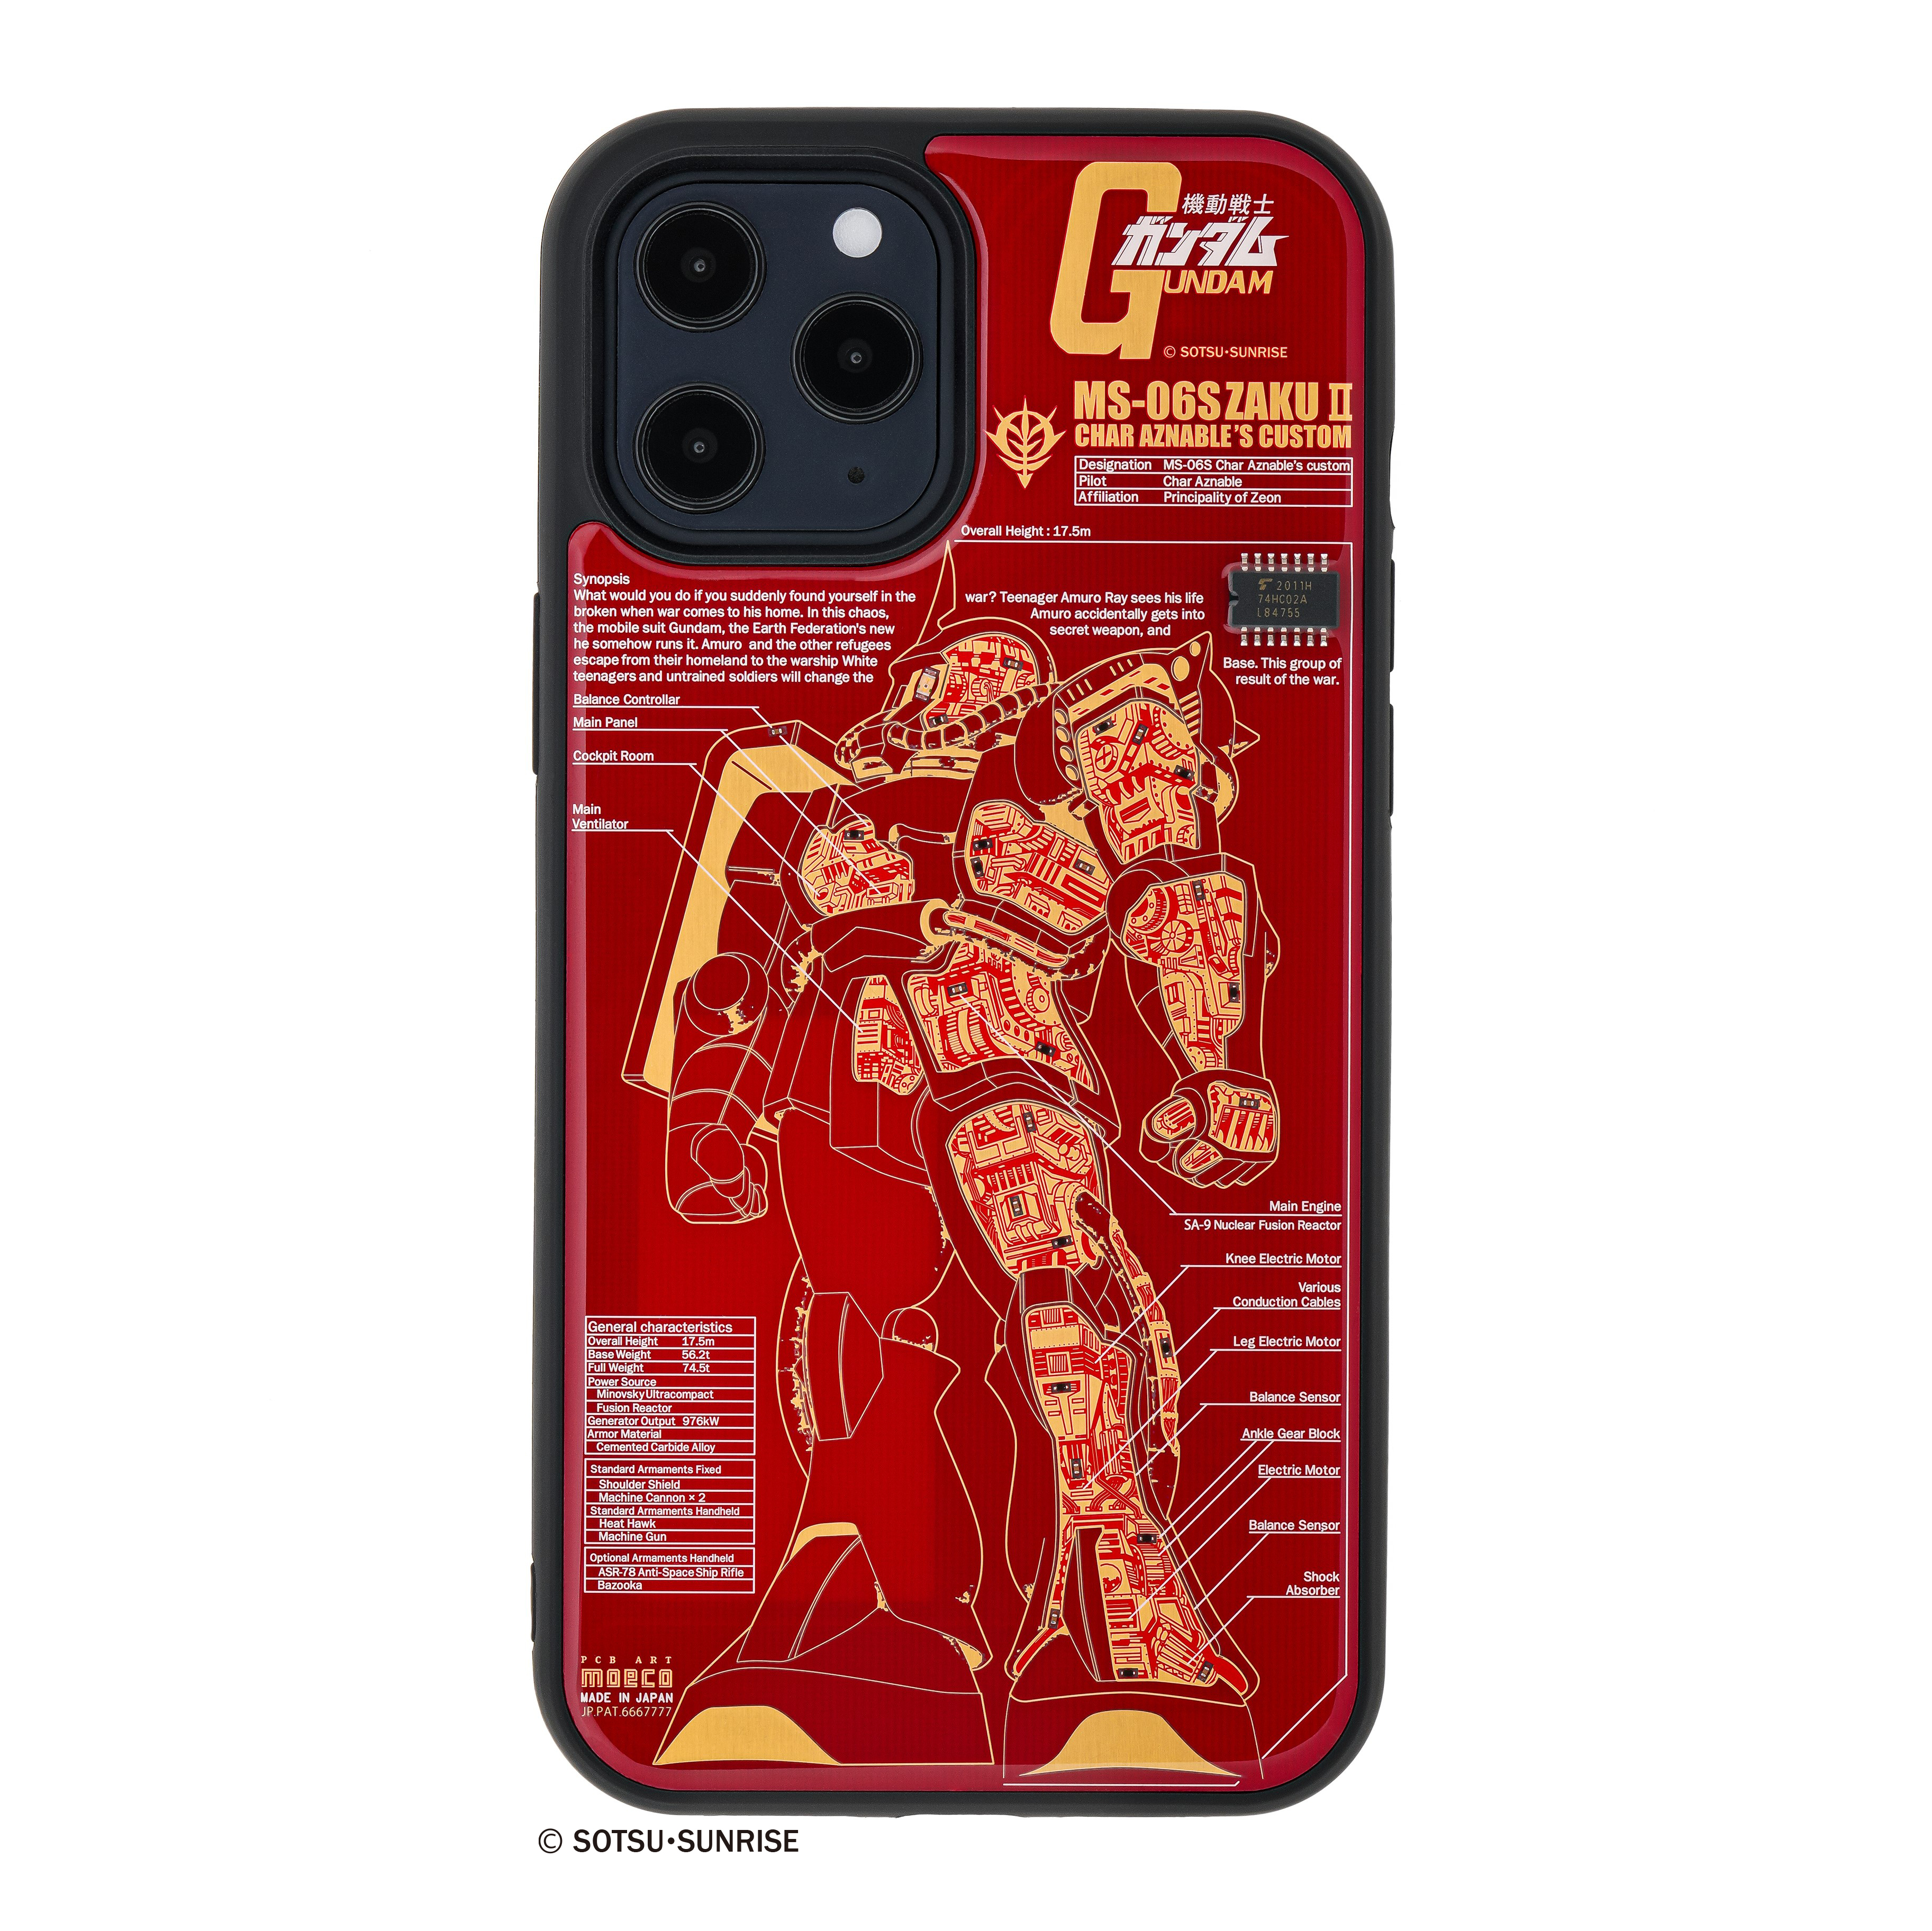 Flash シャア専用ザク 基板アート Iphone 12 Pro Maxケース 東京回路線図a5クリアファイルをプレゼント Pcb Art Moeco